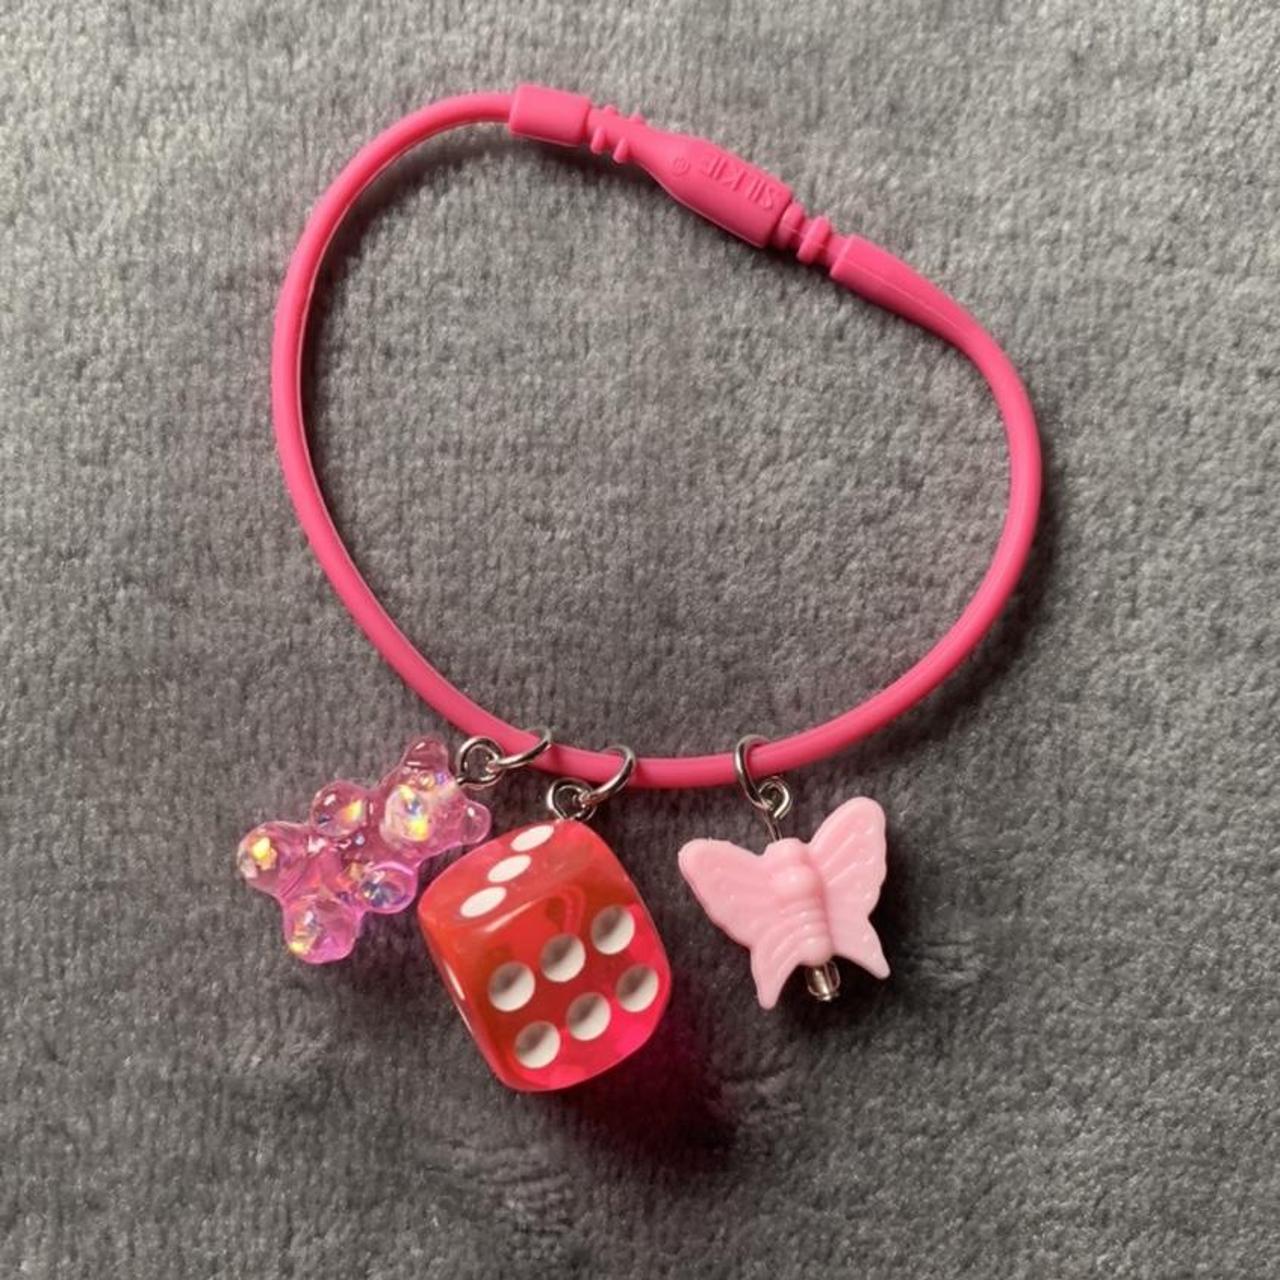 Neon dice rubber cord charm bracelet ^•^ Handmade - Depop